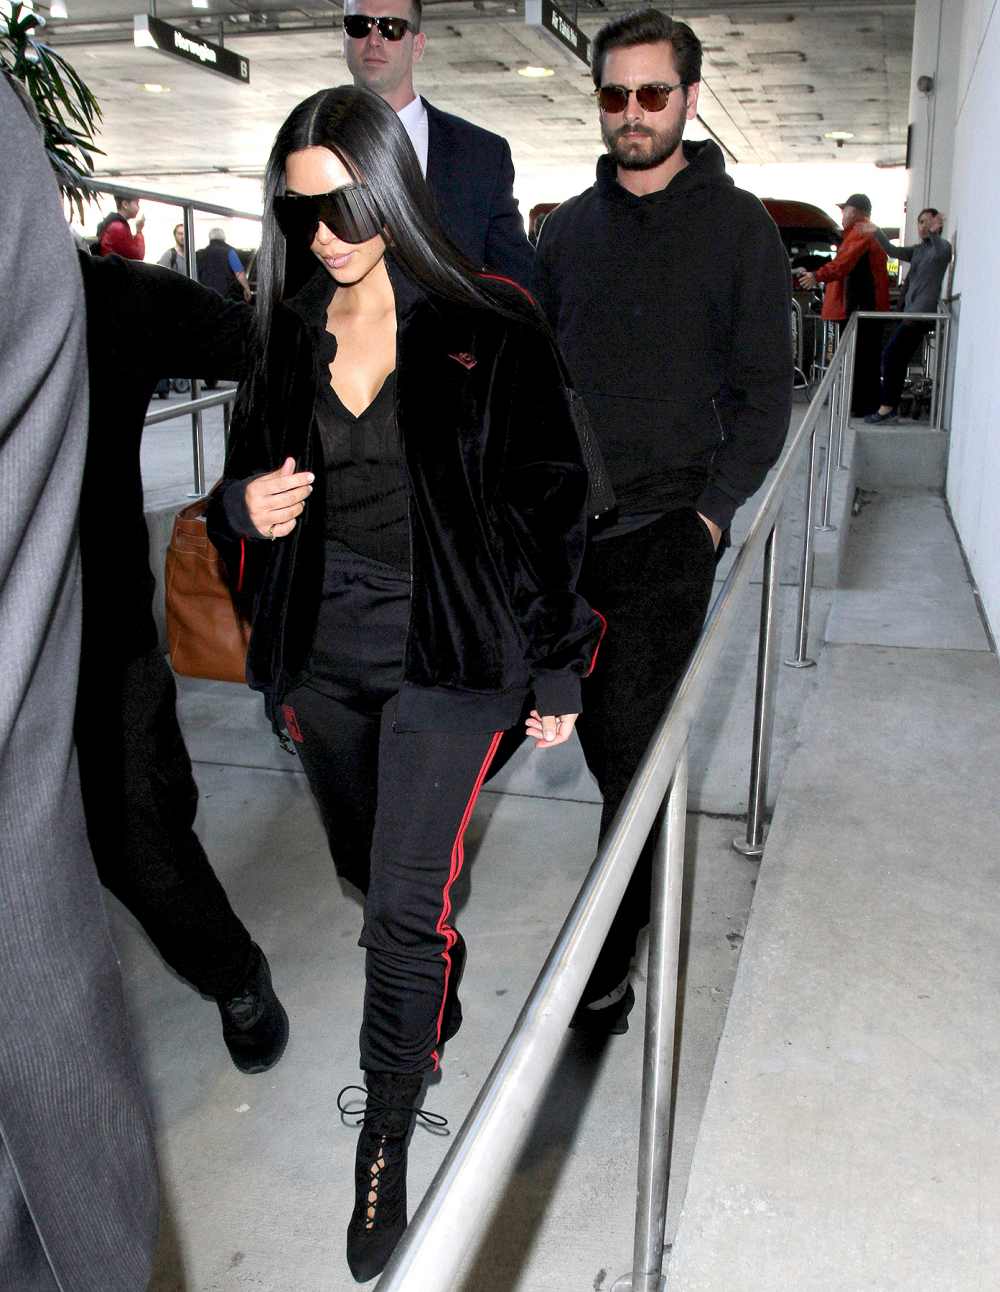 Kim Kardashian at LAX with Scott Disick.